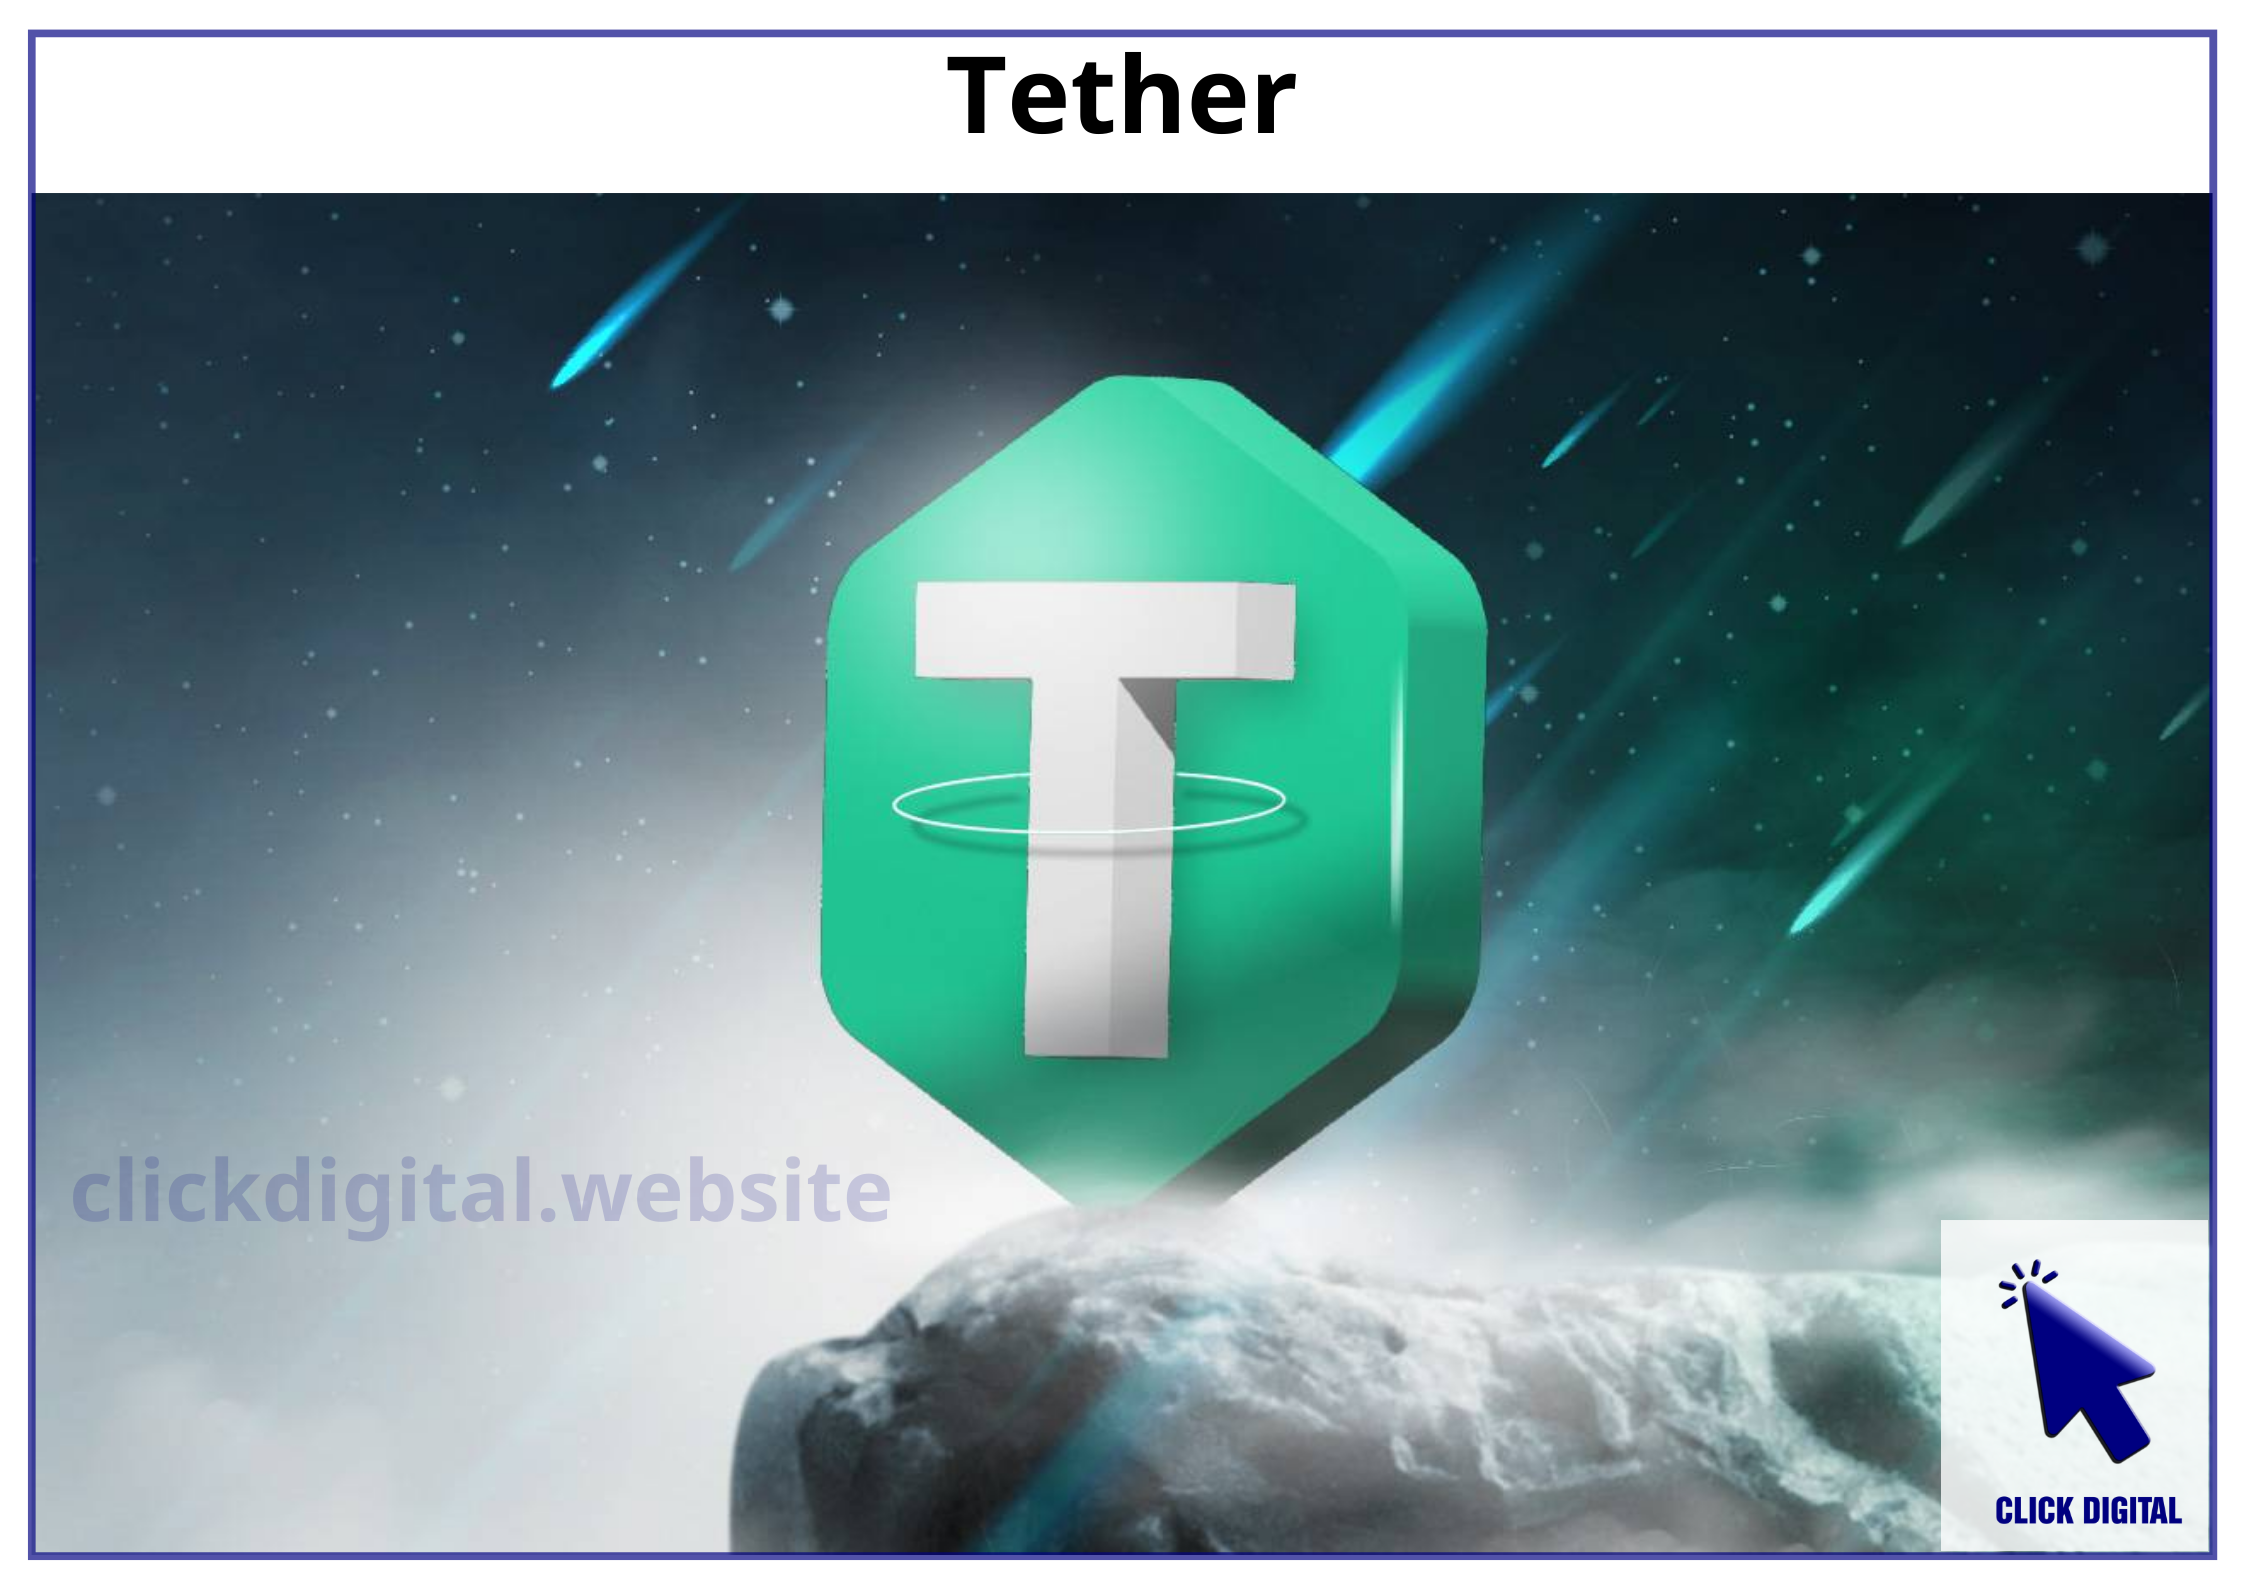 Tether thành lập 4 bộ phận kinh doanh: Tether Data, Tether Finance, Tether Power, Tether Edu